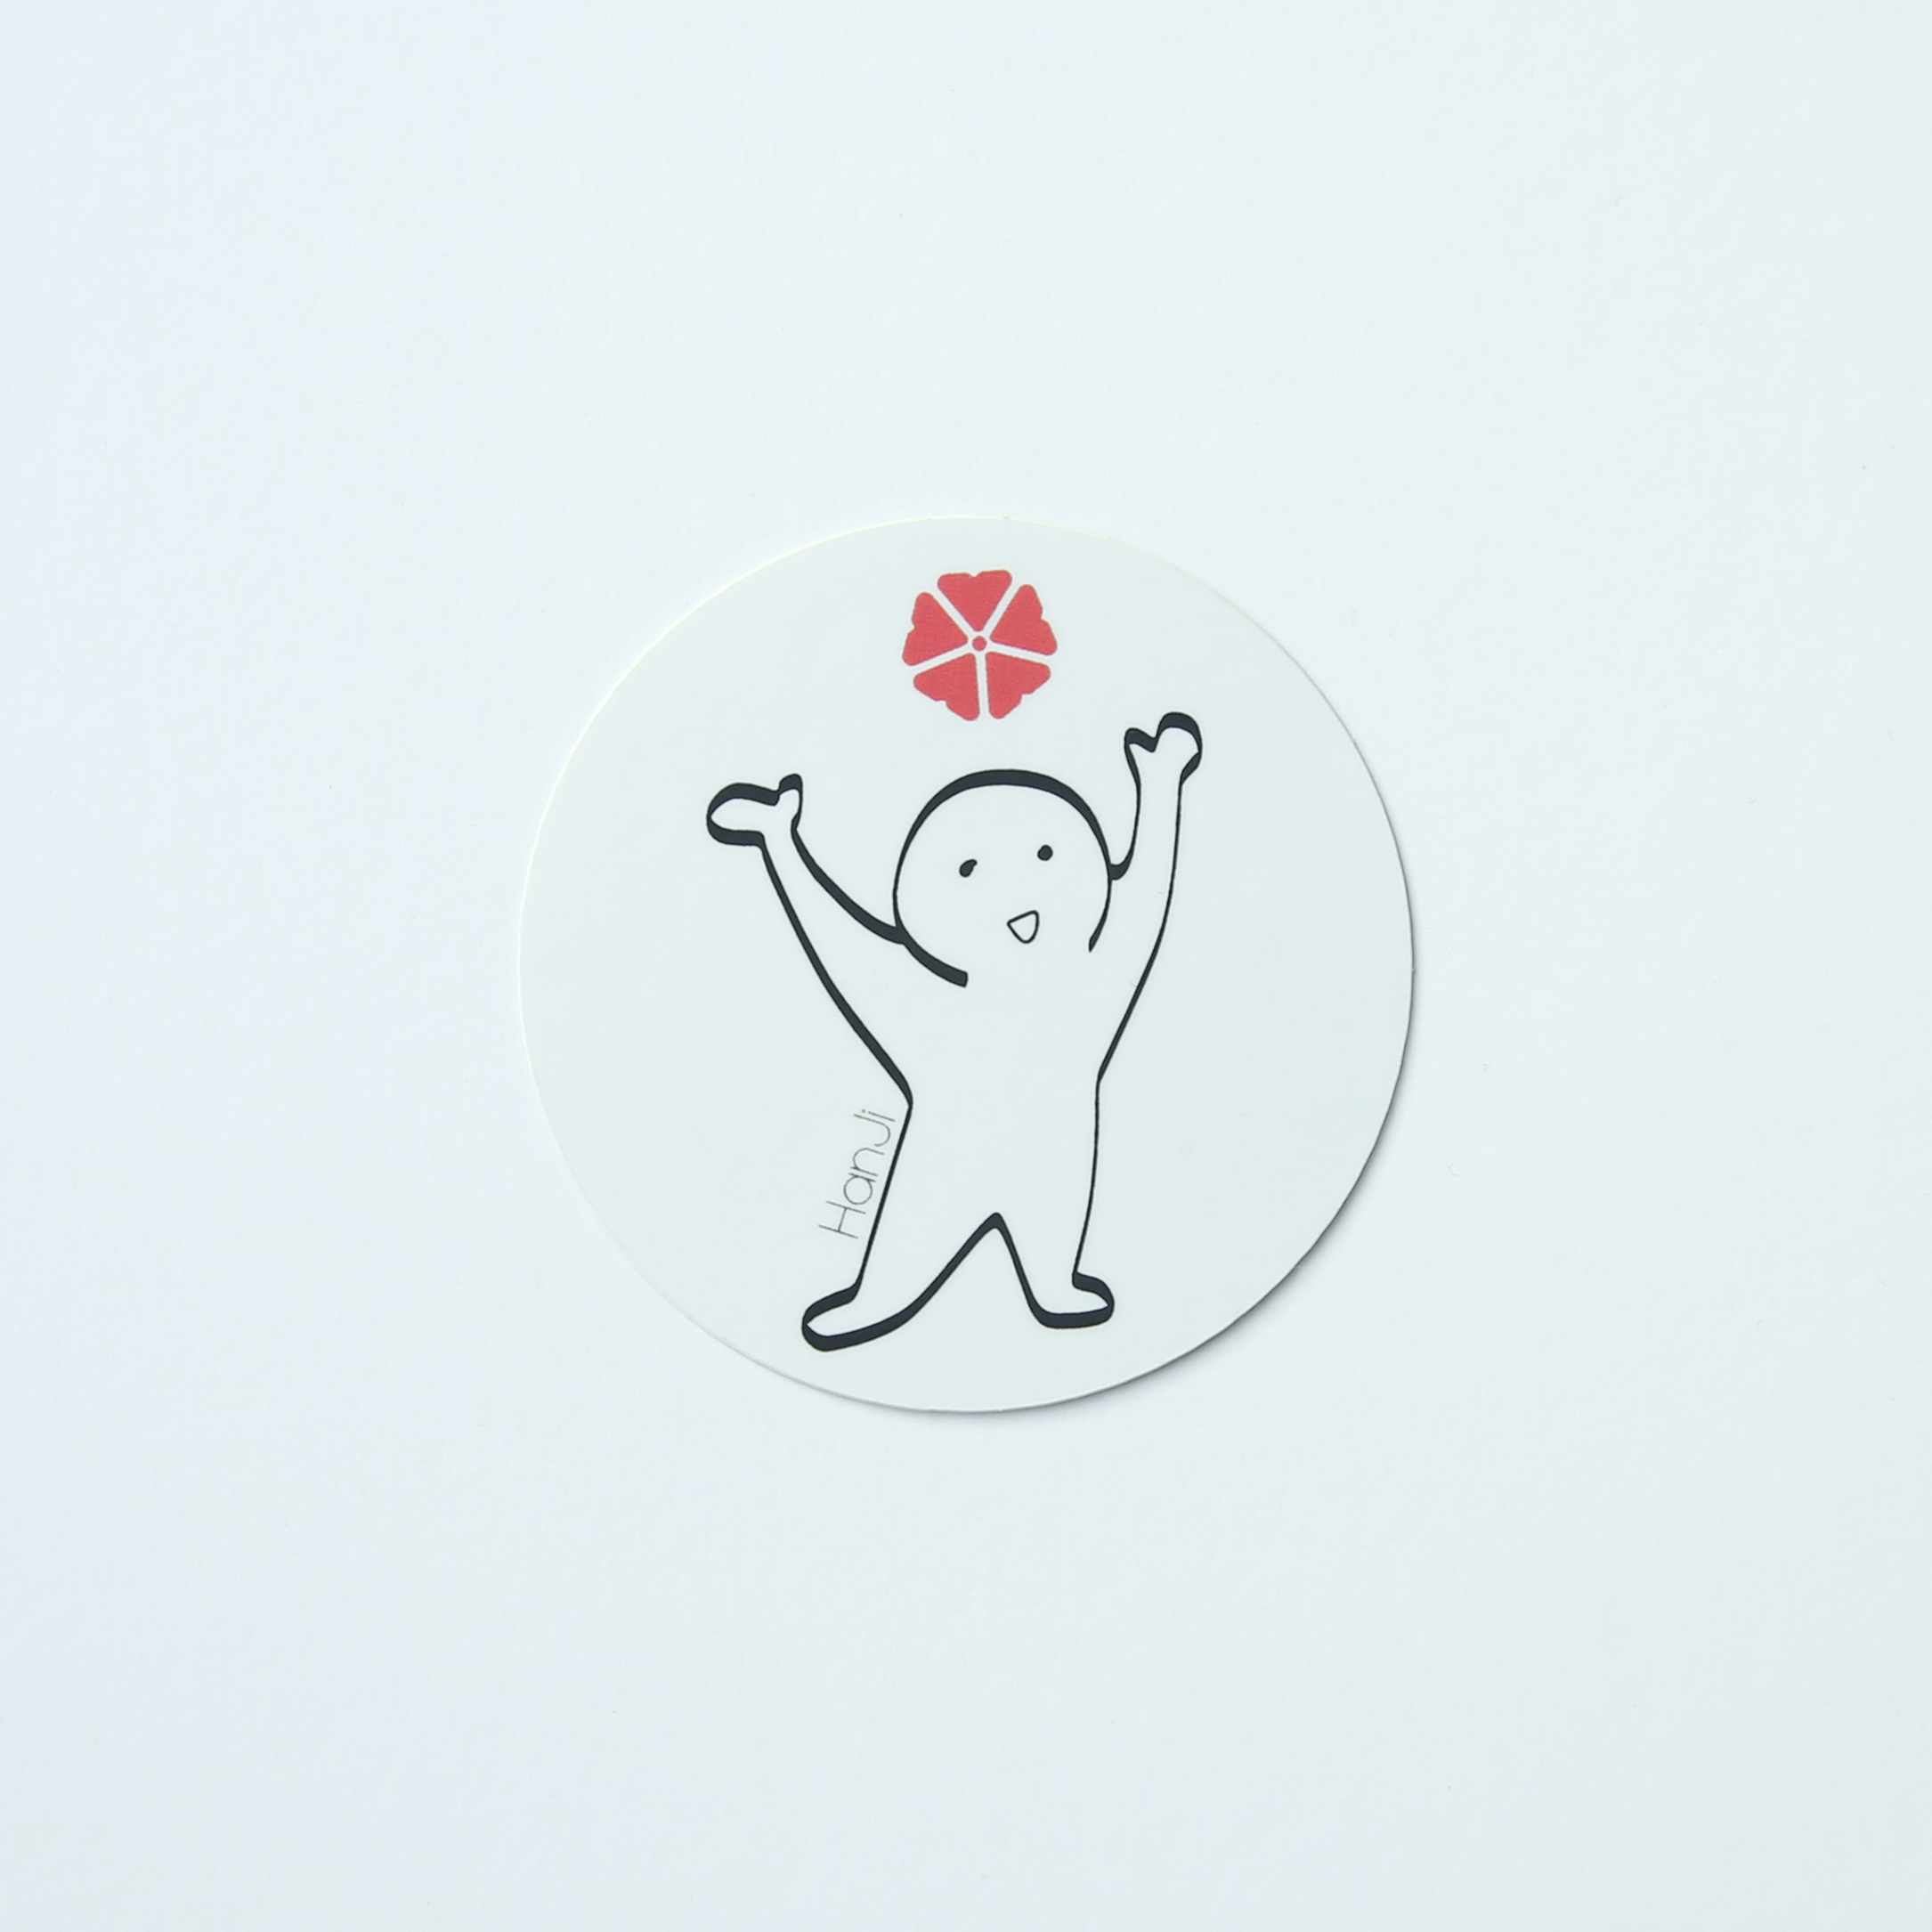 Waterproof sticker with HanJi logo and little human